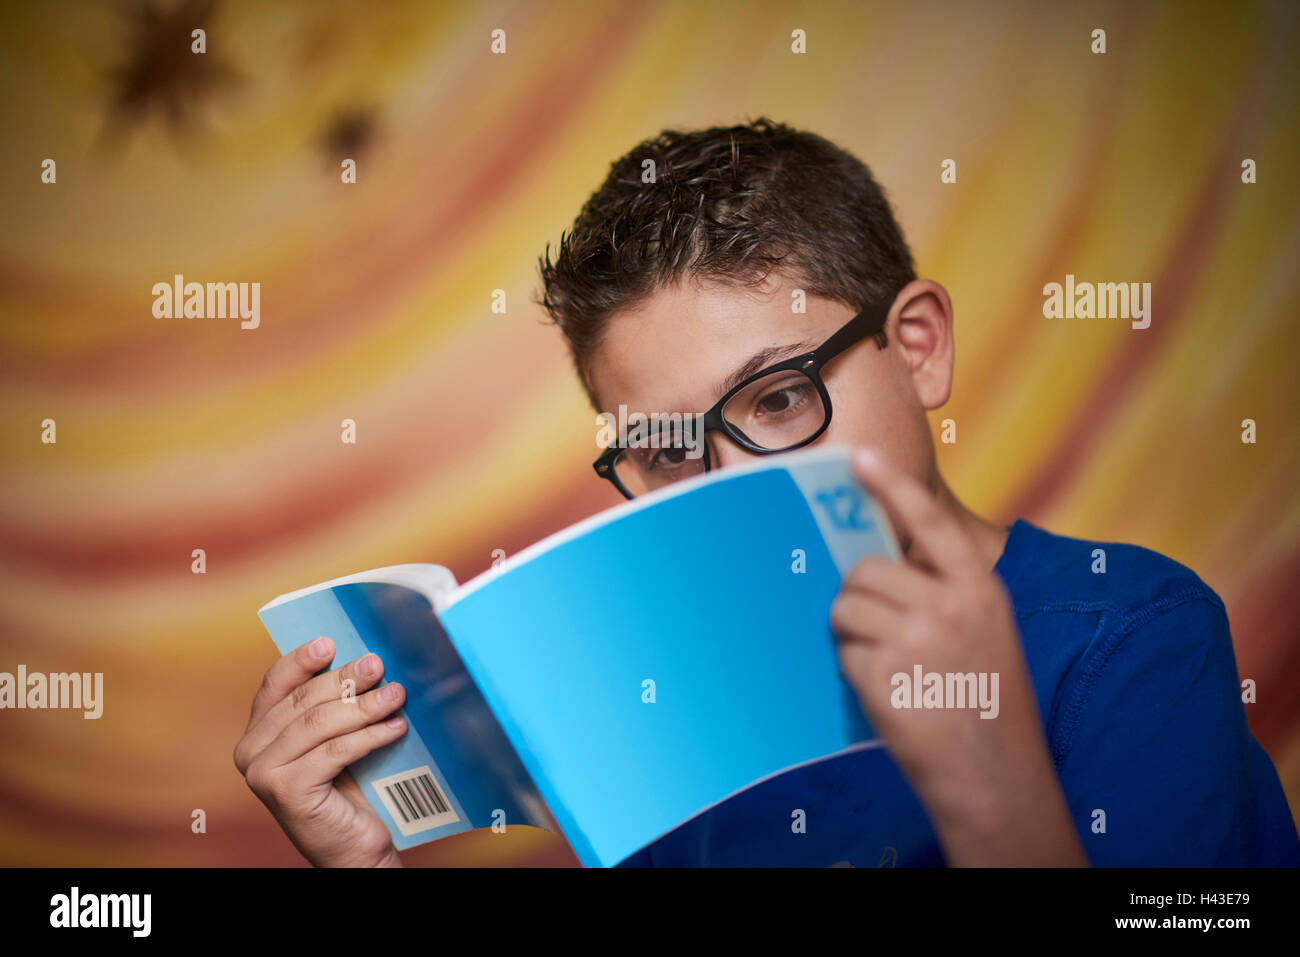 Hispanic boy reading blue book Stock Photo